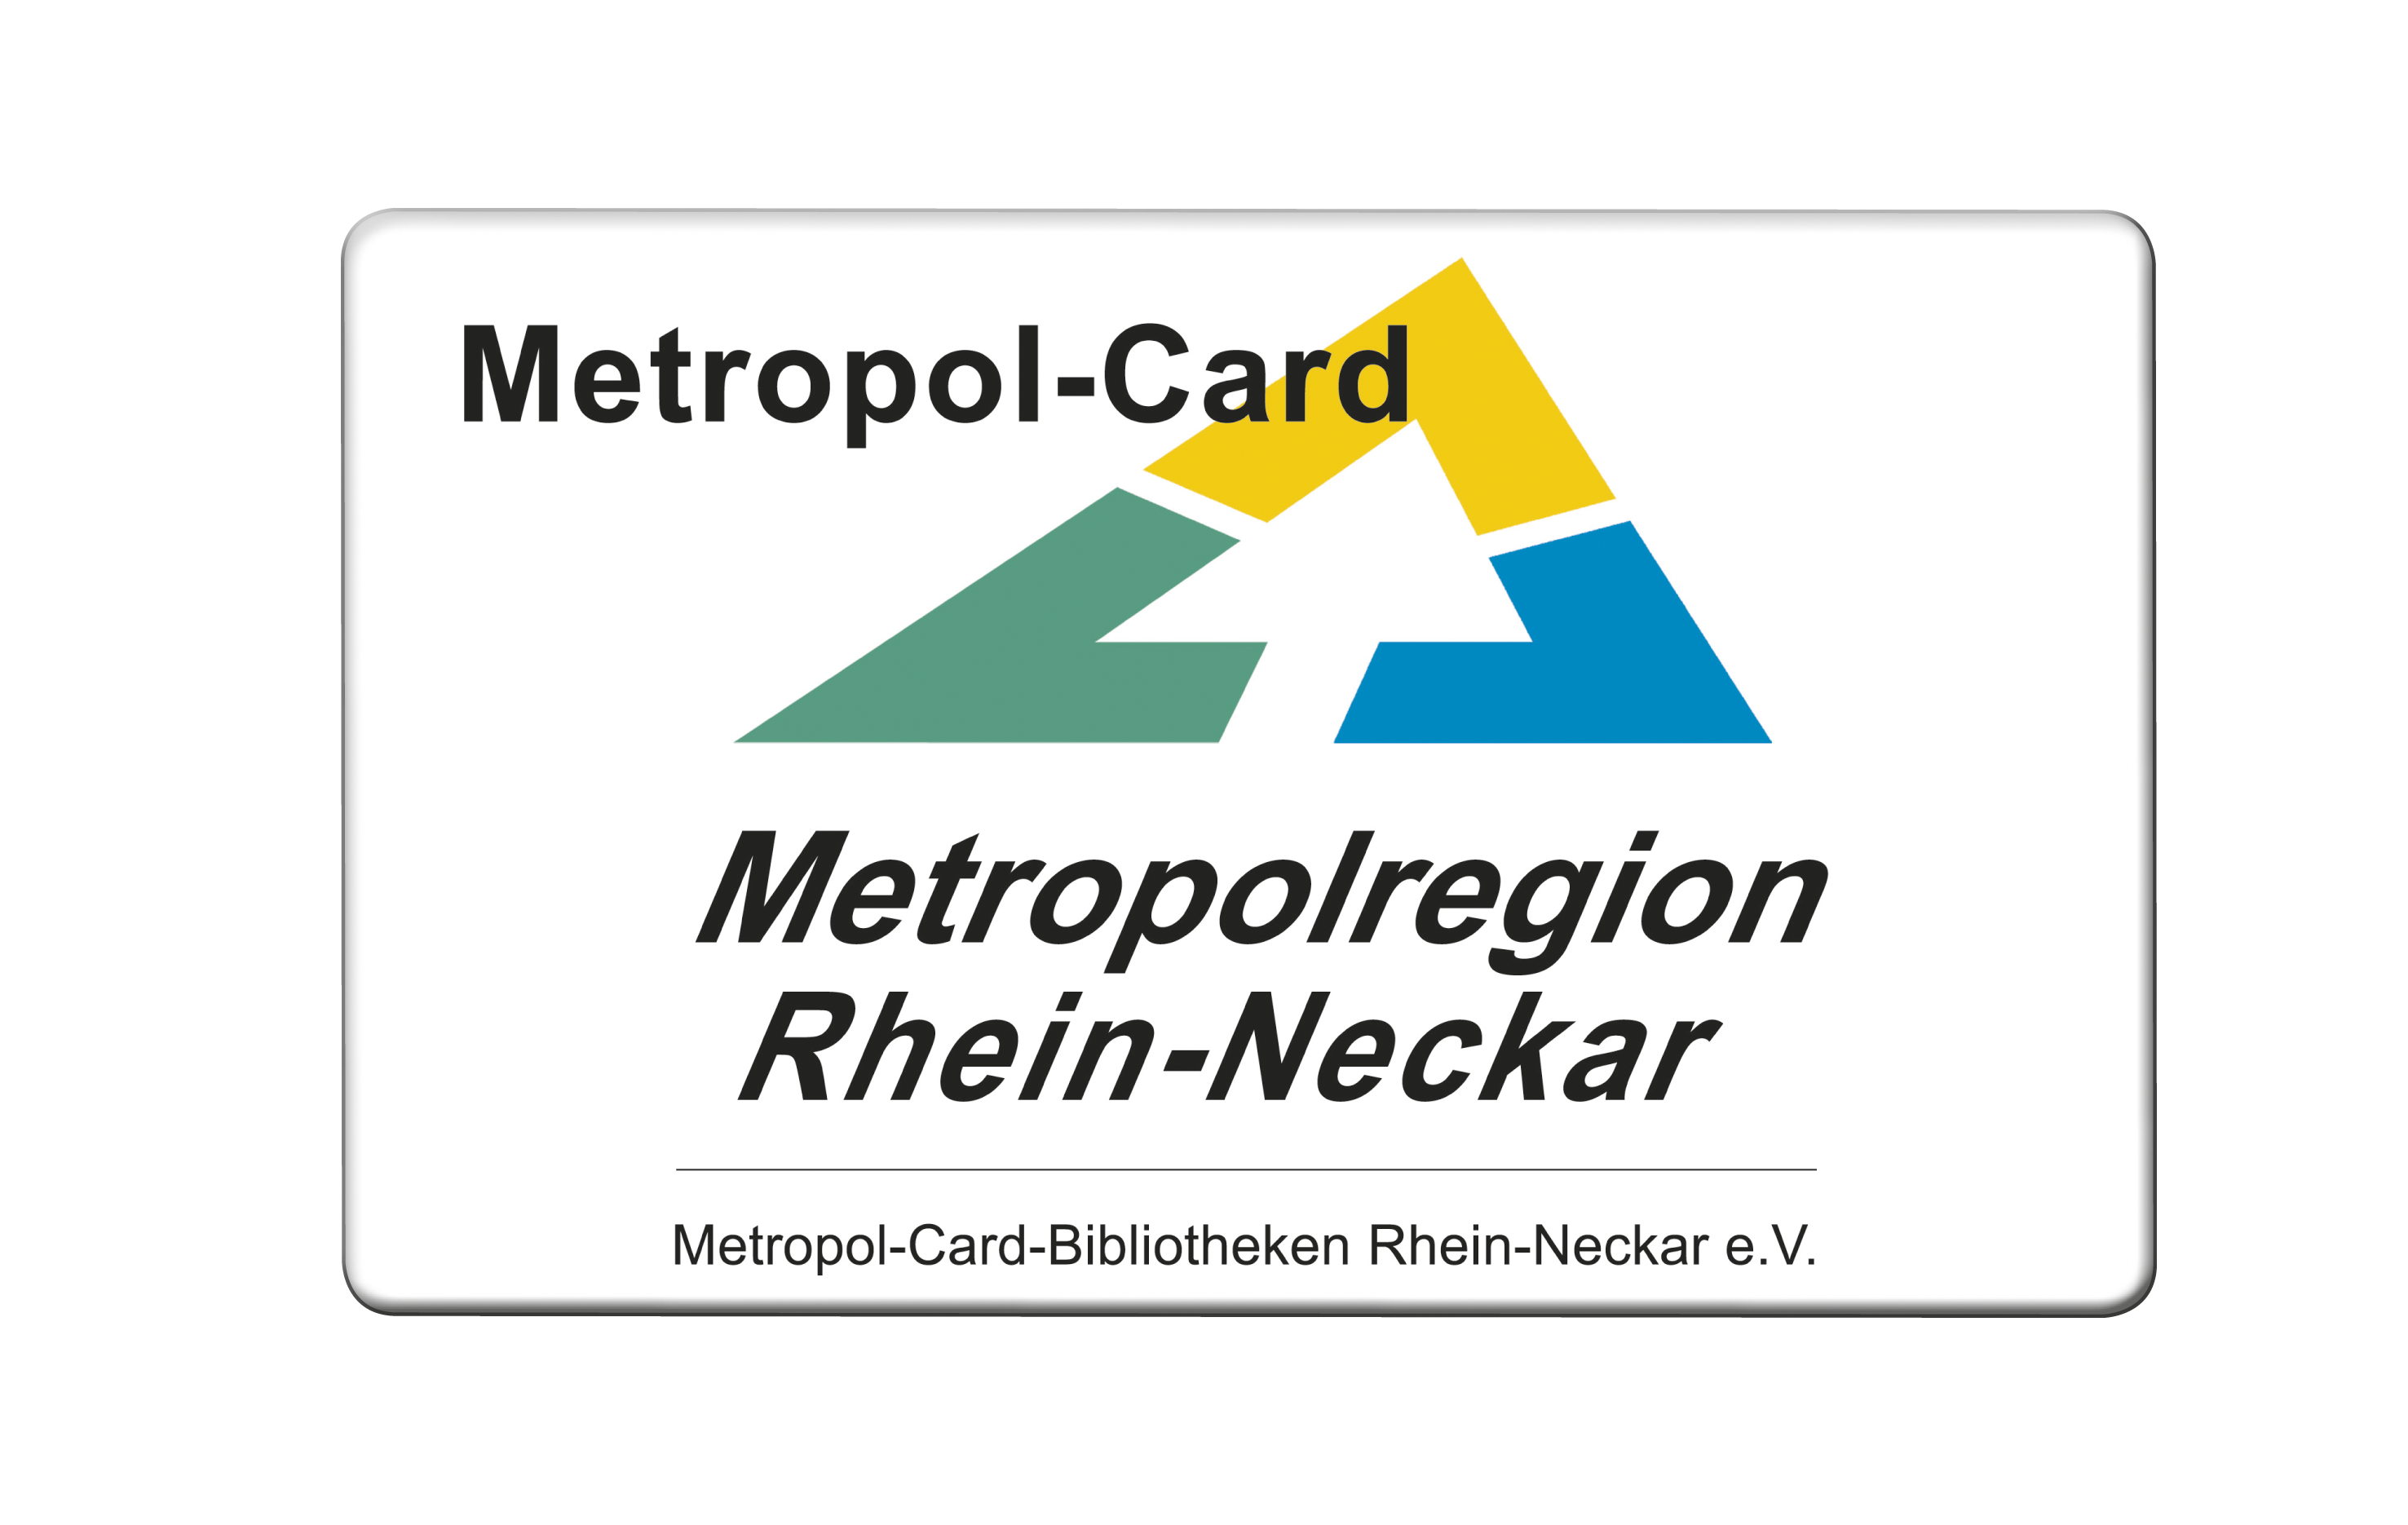 Abbildung Metropolcard, Bild: metropolbib.de